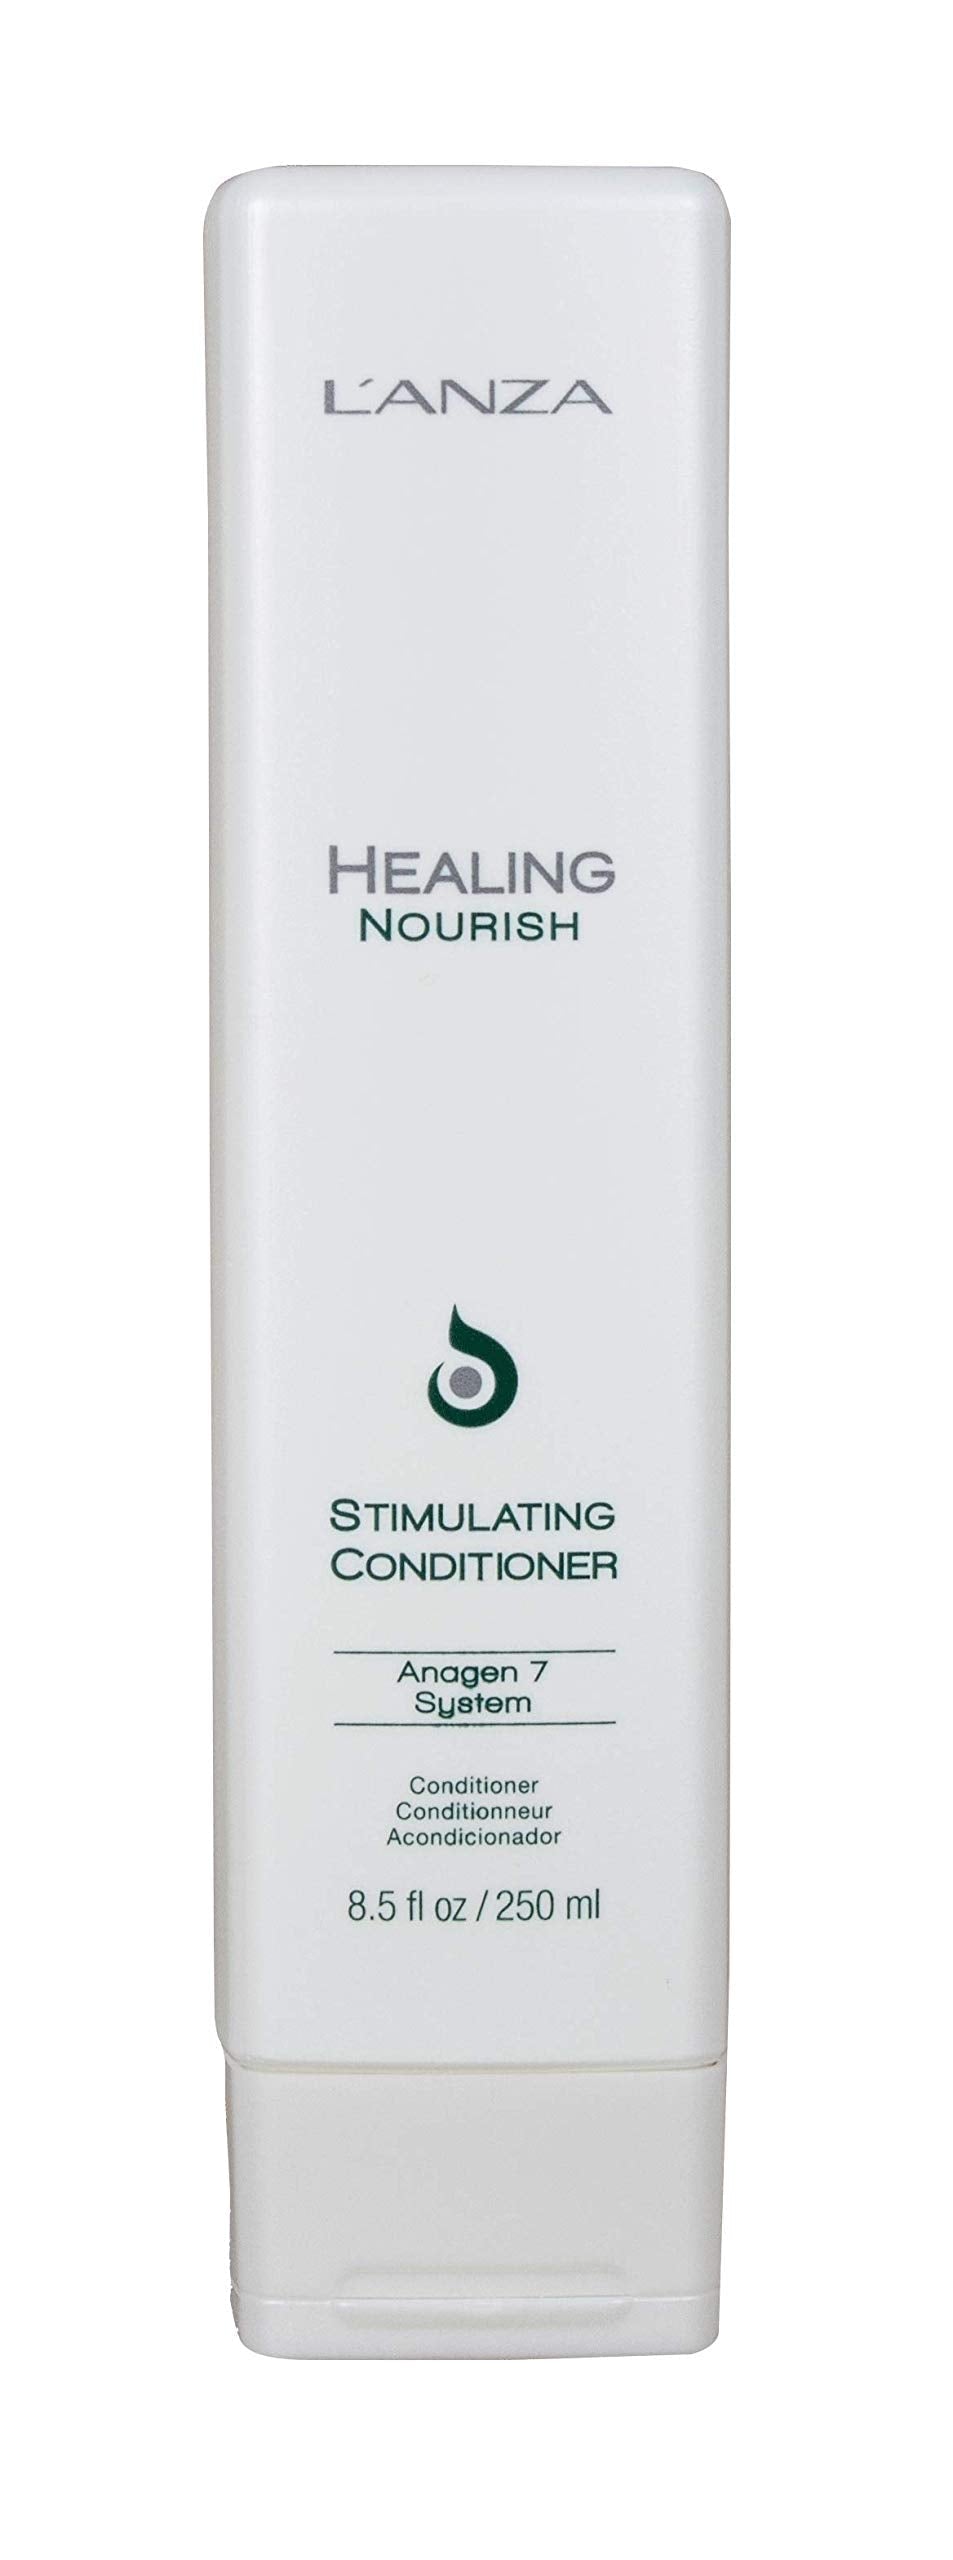 [Australia] - L'ANZA Healing Nourish Stimulating Conditioner, 250 ml 